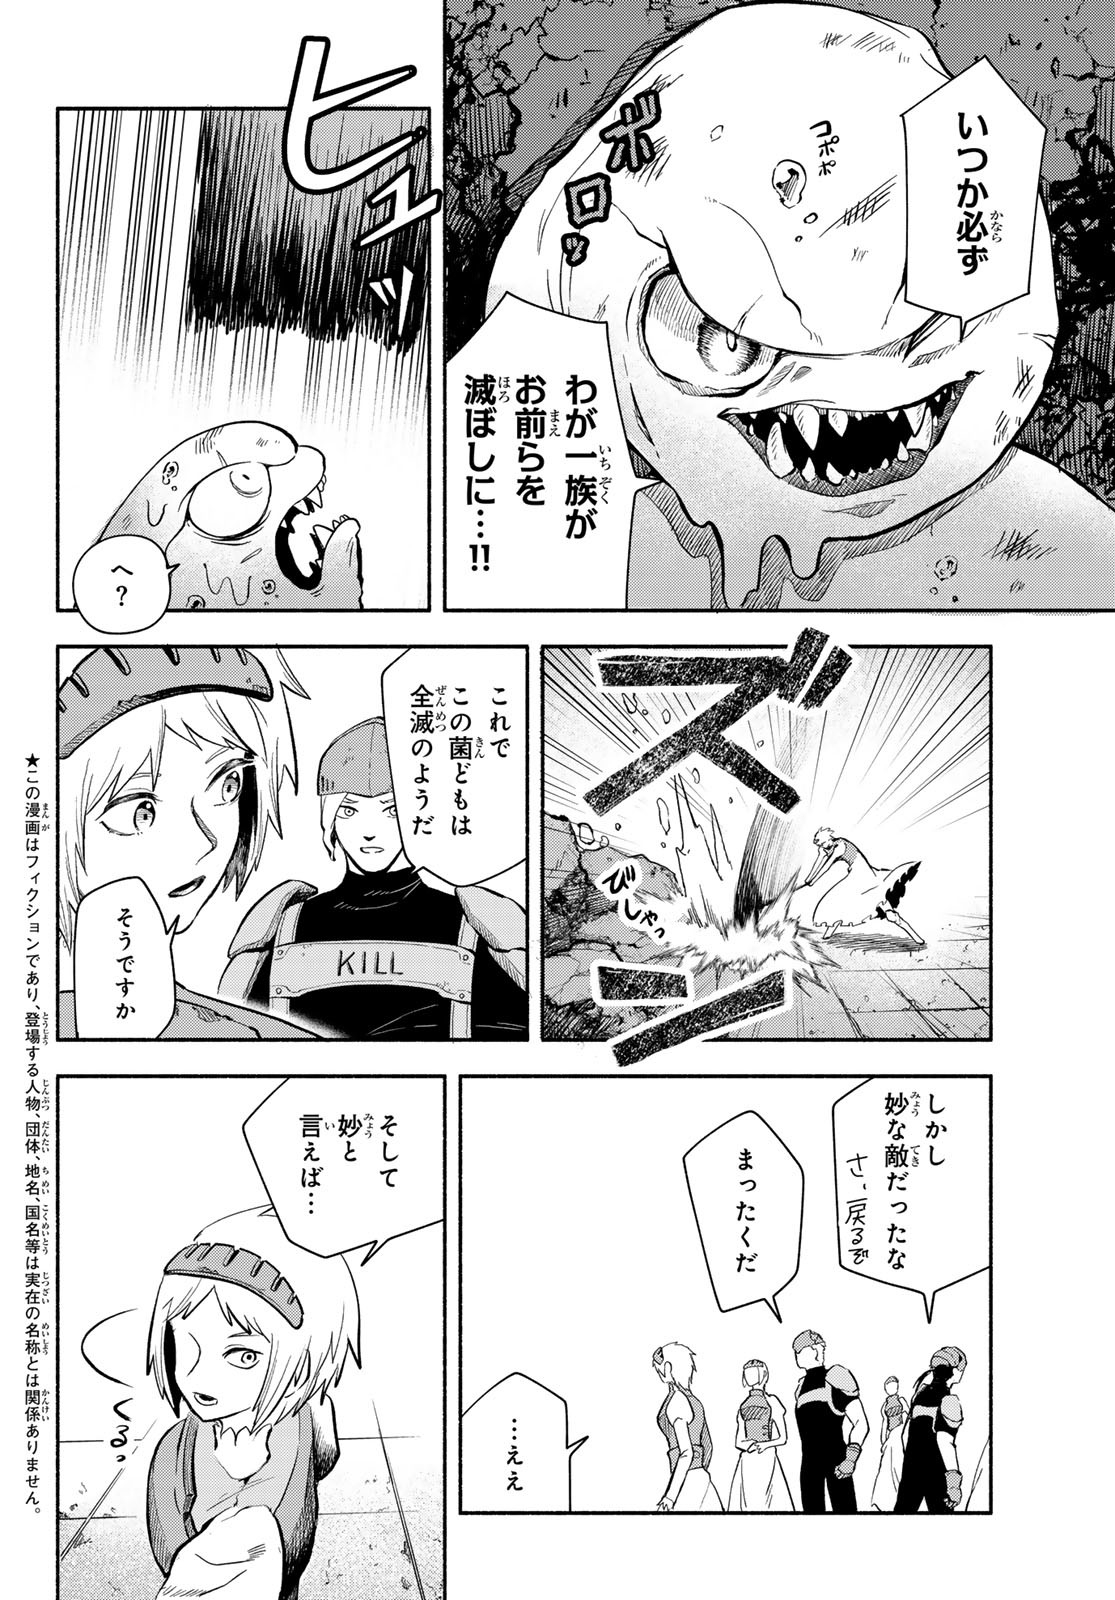 Hataraku Saibou Okusuri - Chapter 7.1 - Page 2